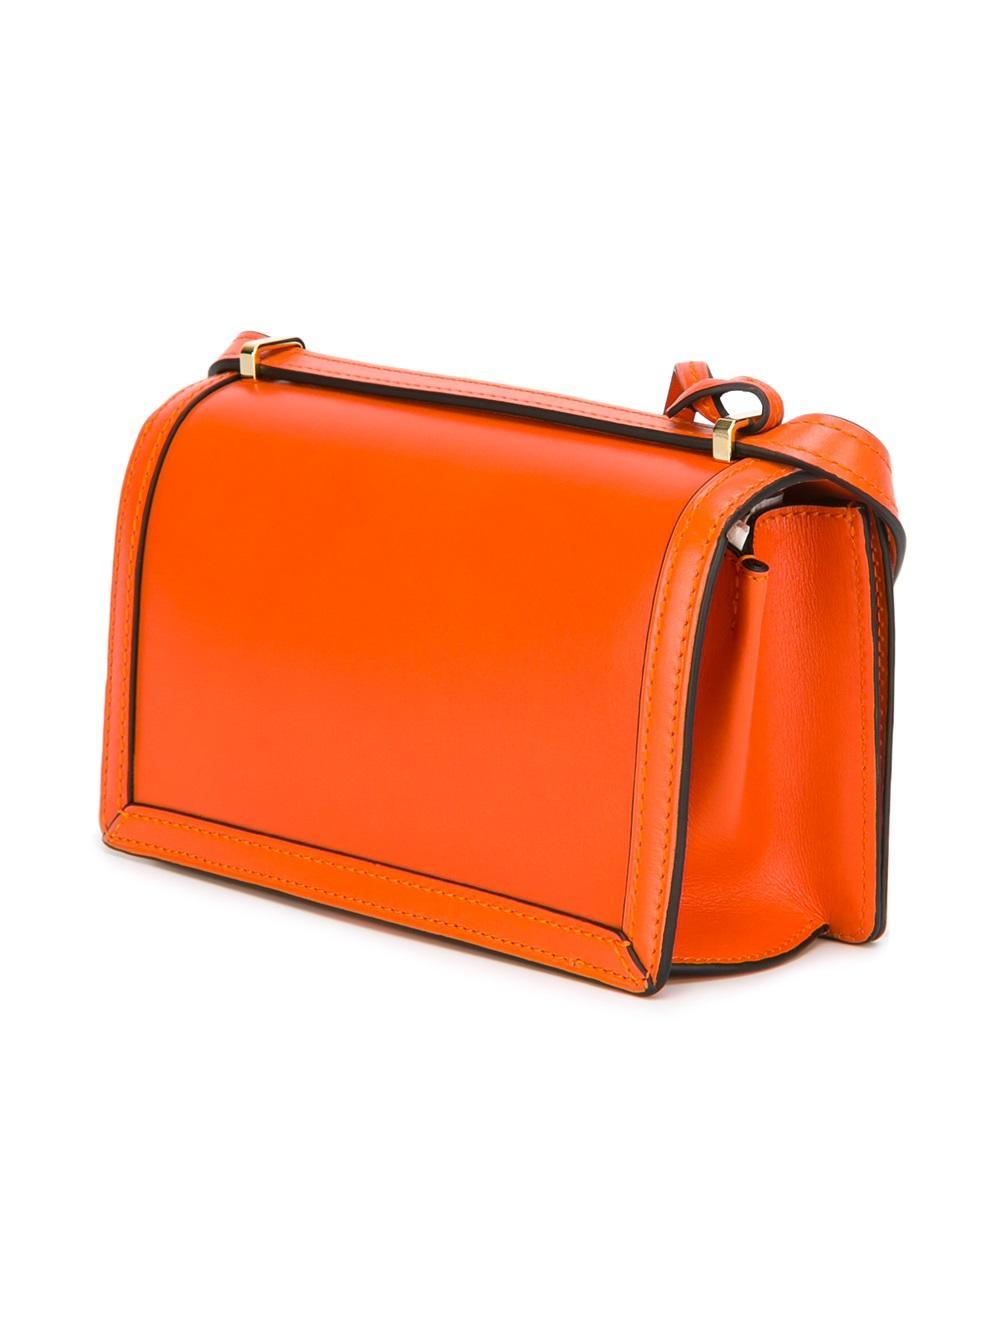 Loewe Leather Barcelona Crossbody Bag in Yellow/Orange (Orange) - Lyst